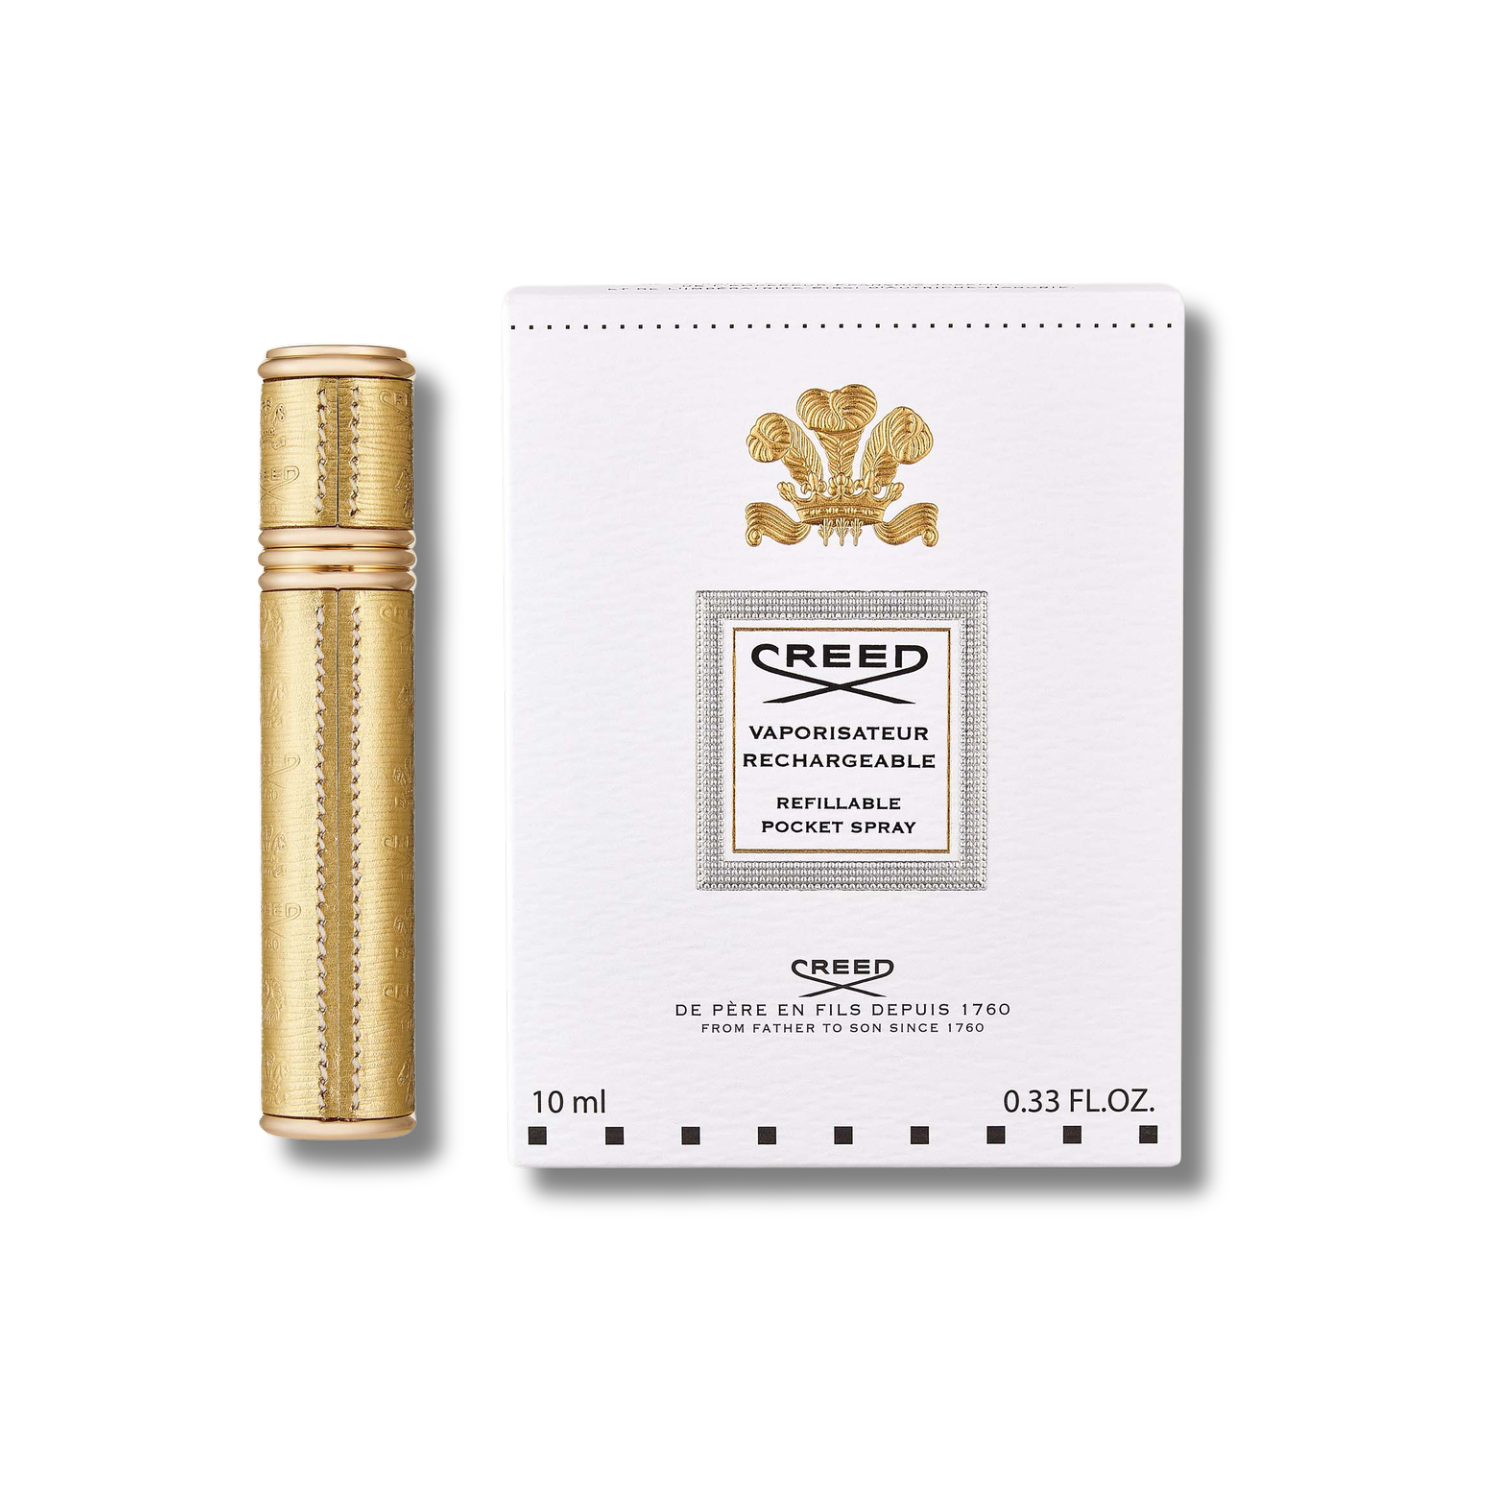 Gold & Gold Refillable Travel Perfume Atomiser